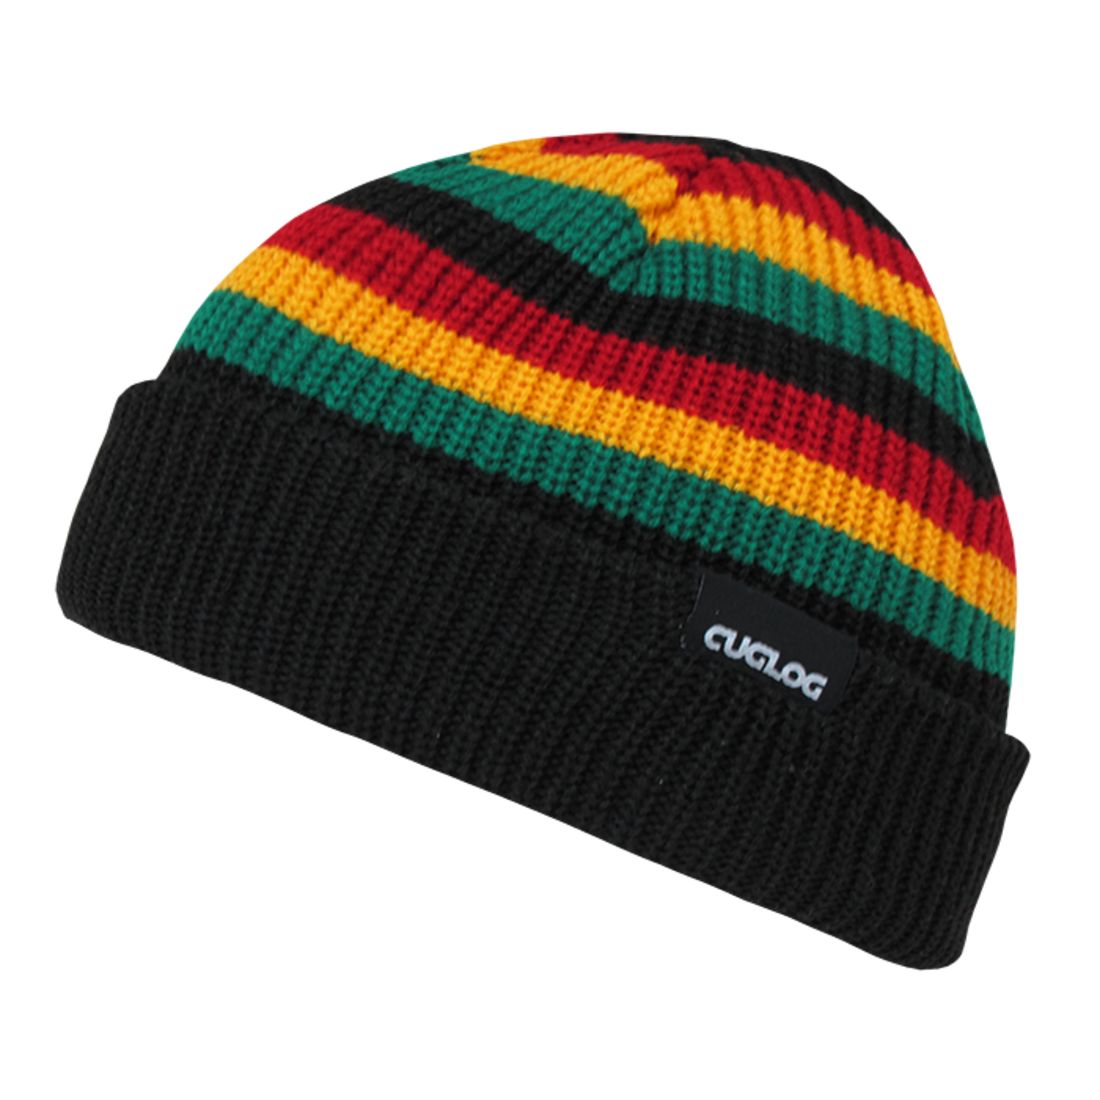 Cuglog K005 Rasta Sailor Striped Knit Beanies Hats Three Tone Winter Ski Caps